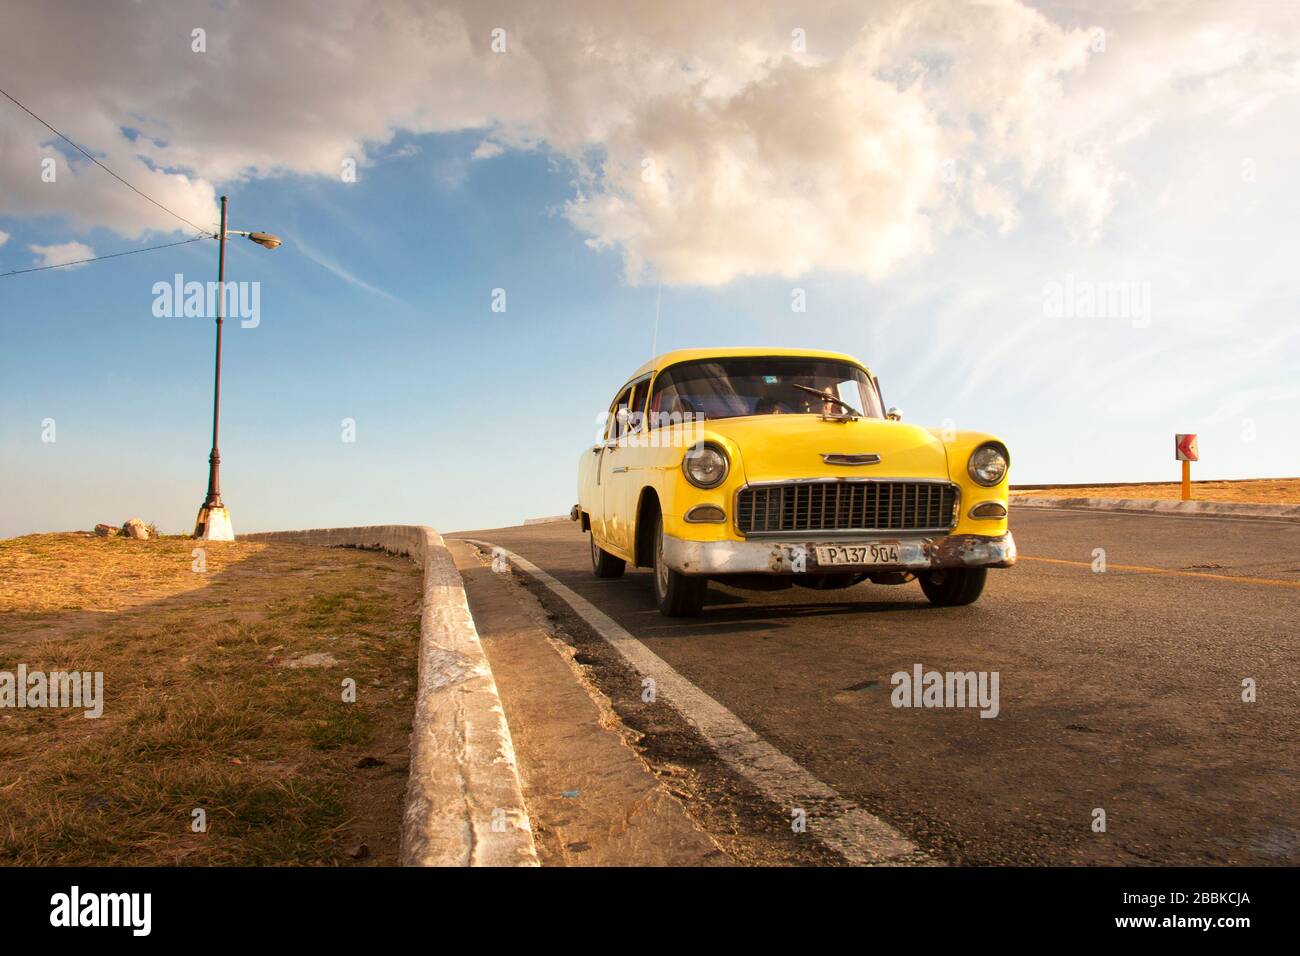 HAVANA, CUBA - MARCH 31, 2017: Old and rusty yellow American car driving on a Havana highway. Cuba Stock Photo